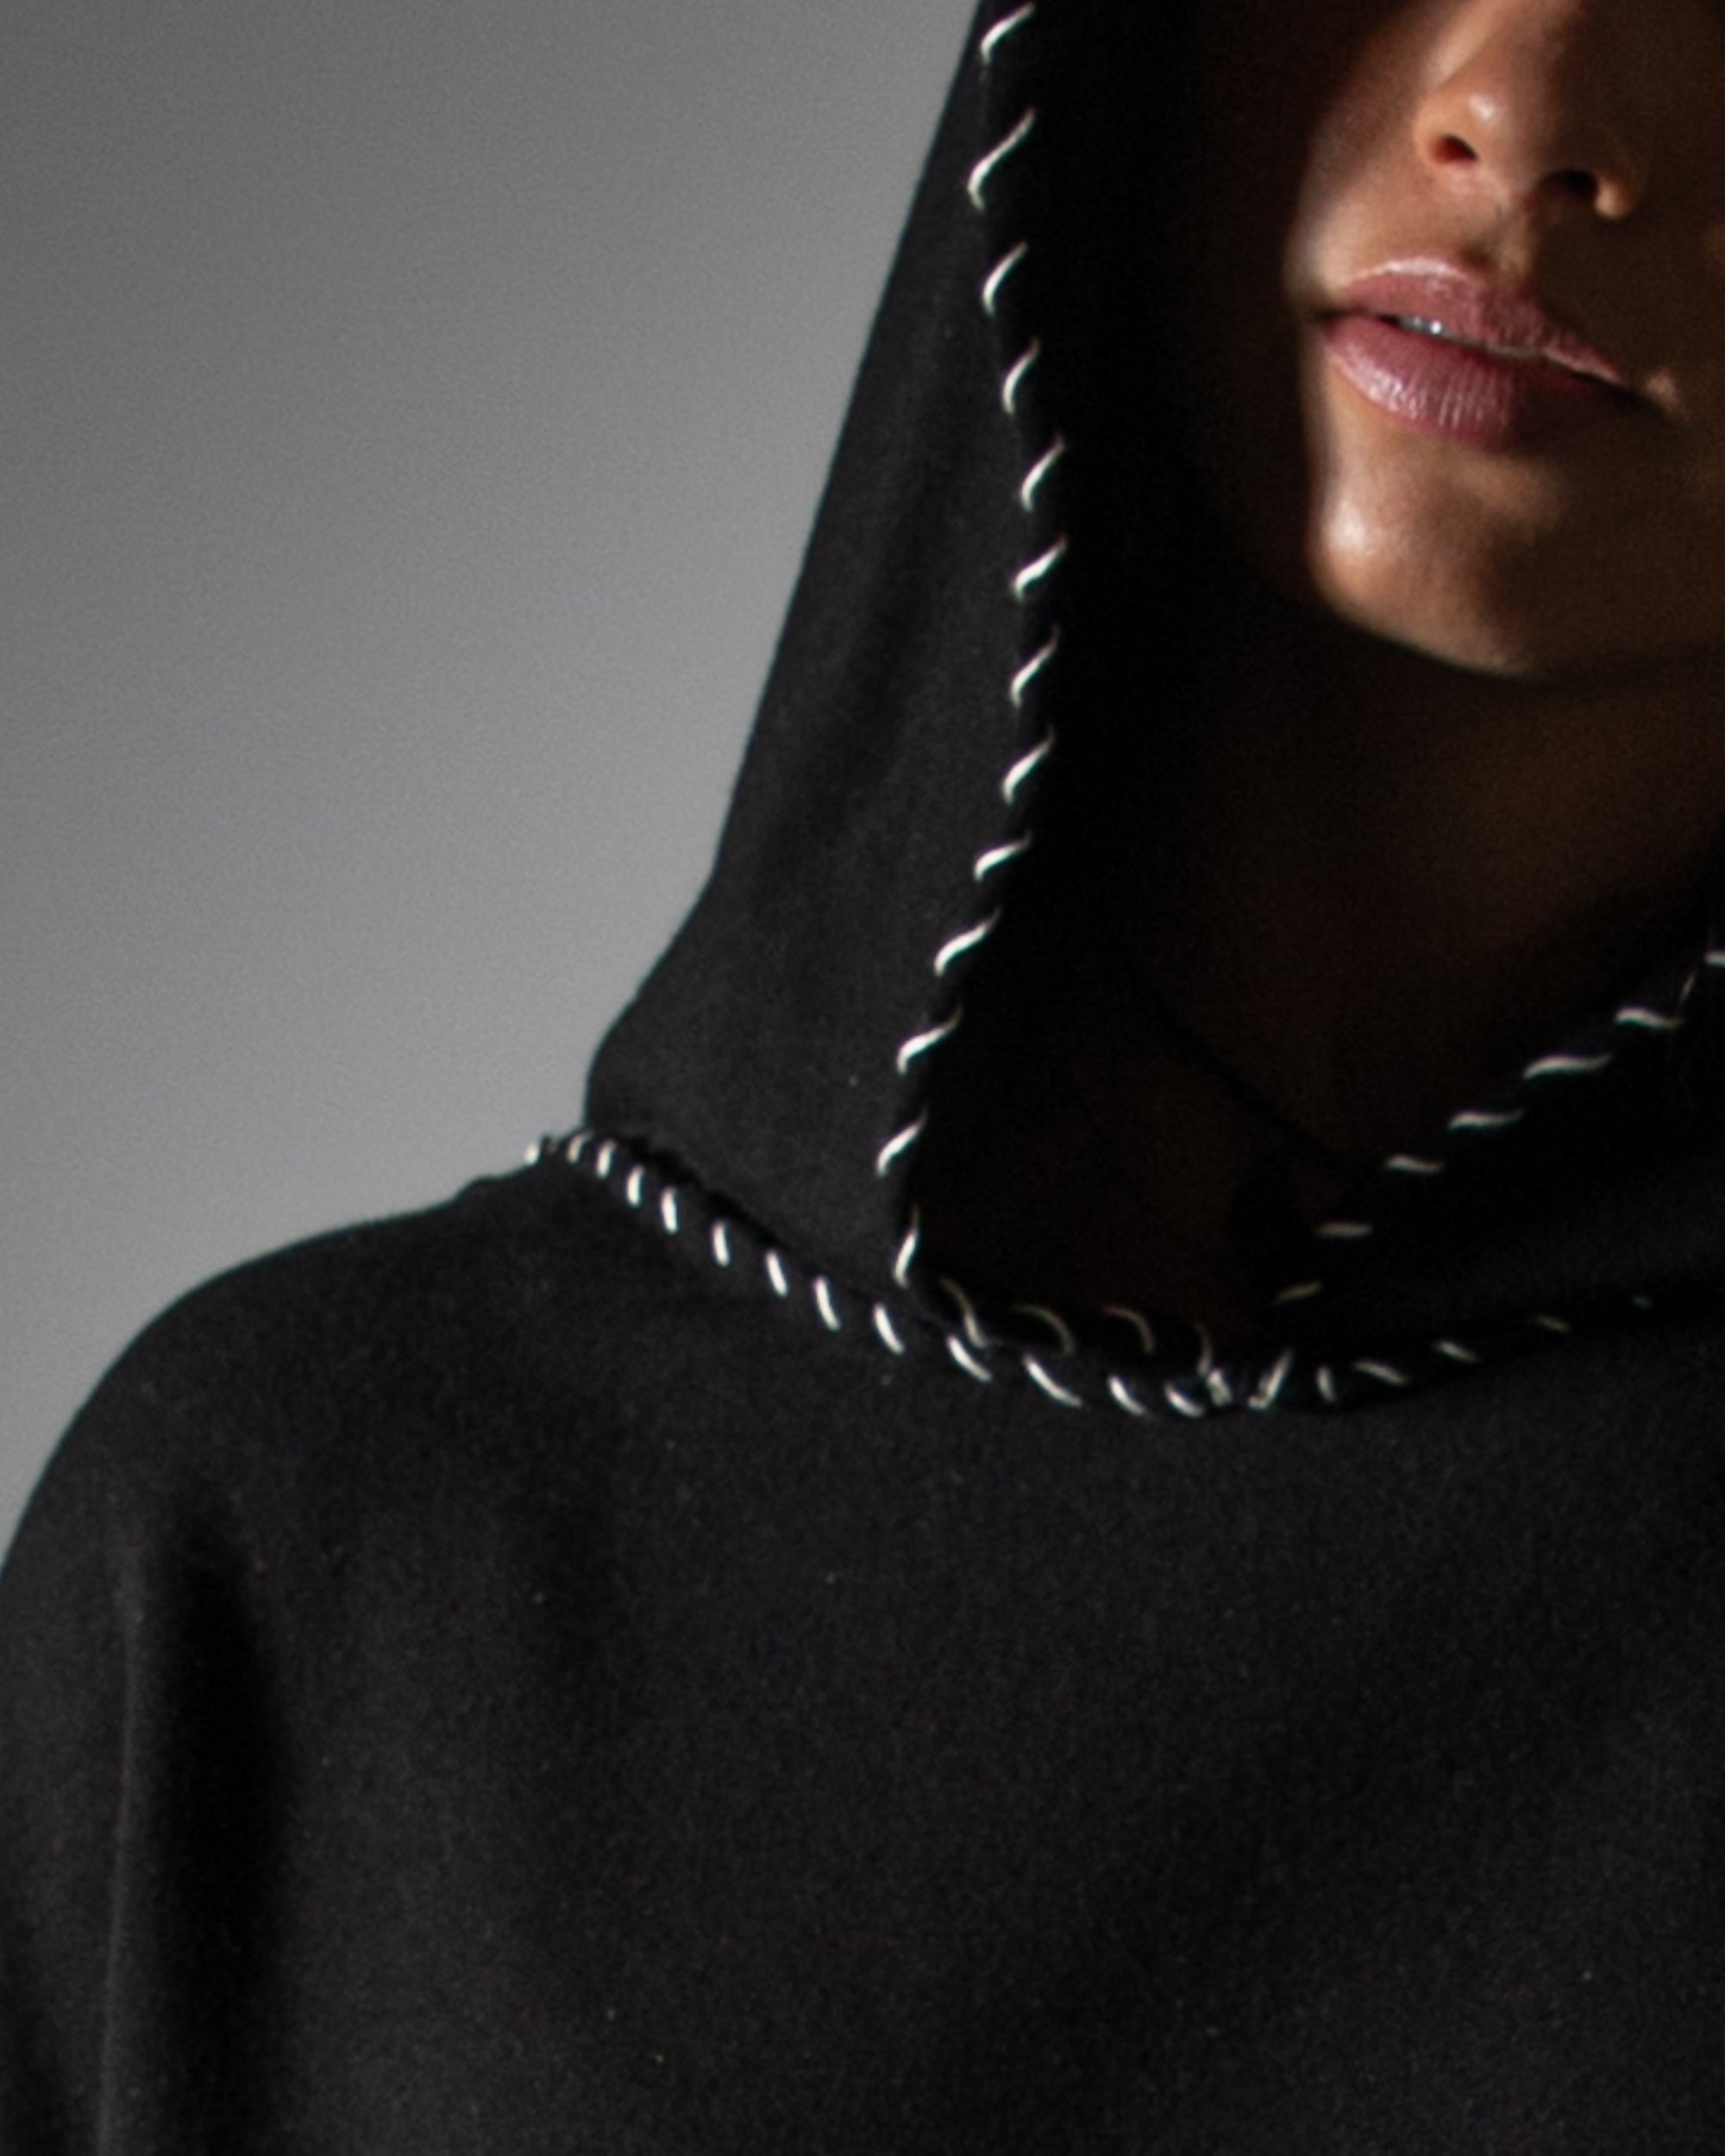 Black Hooded Sweatshirt with Palm Tree Appliqué